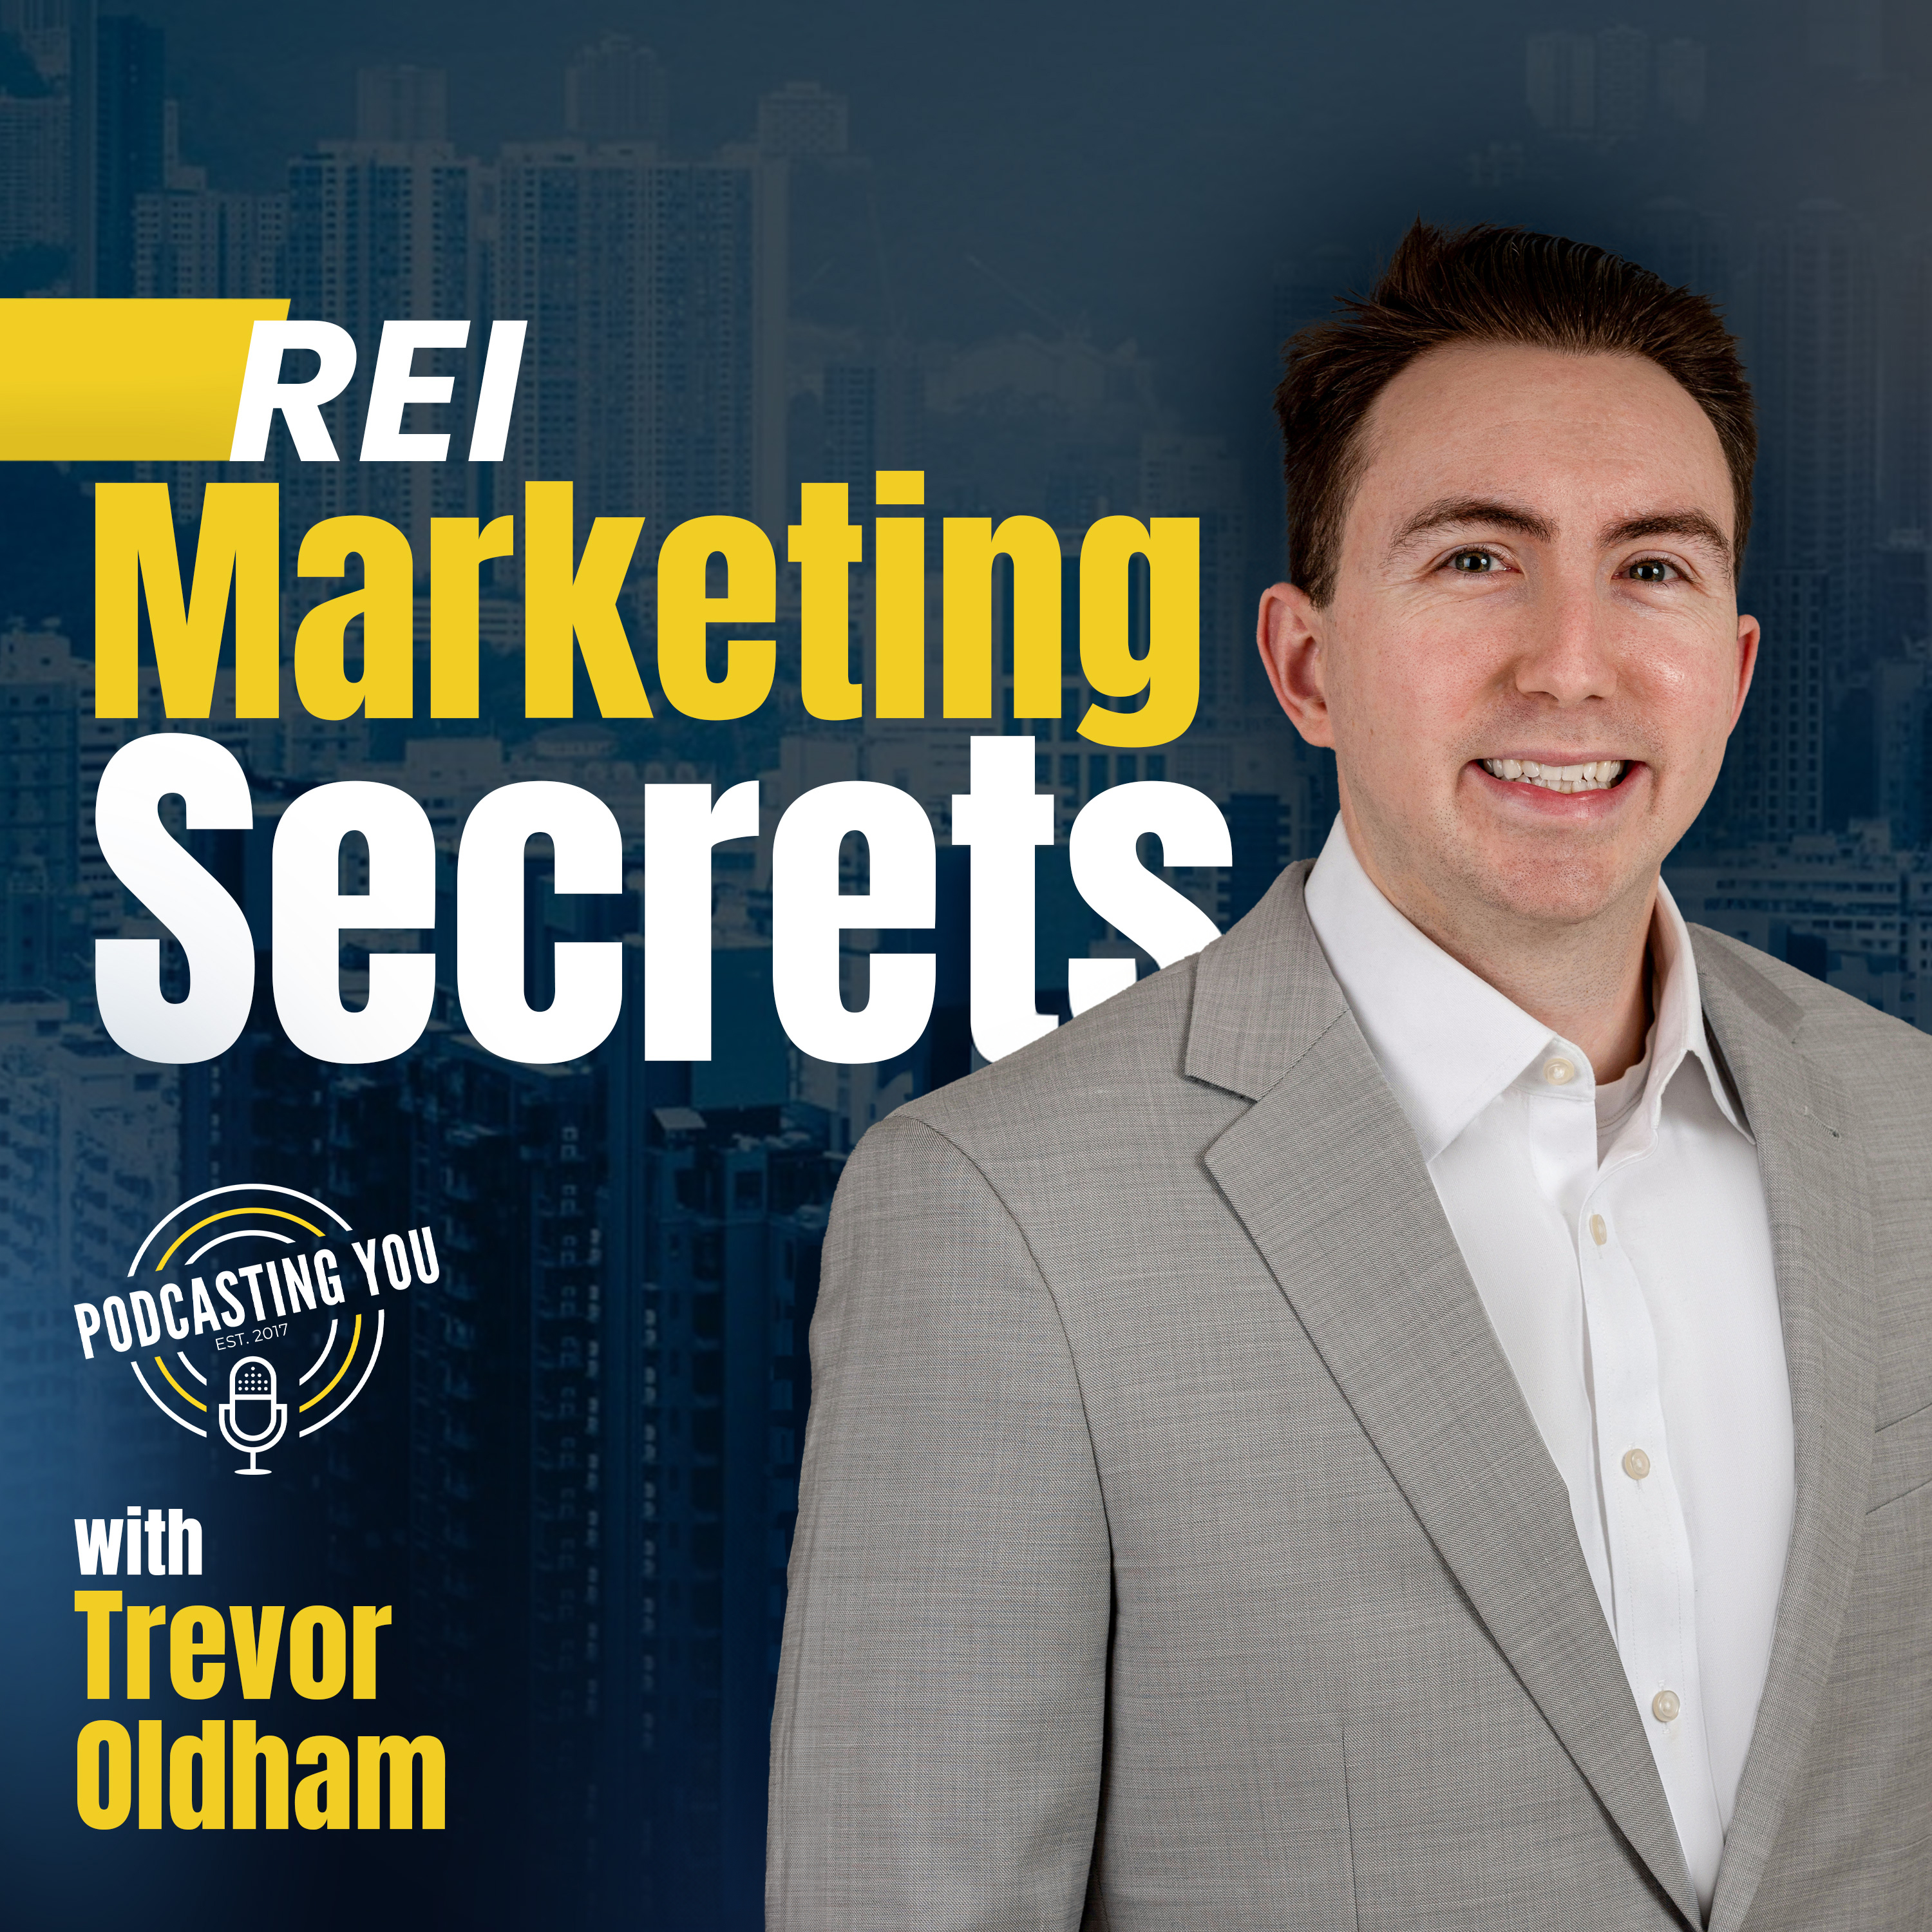 REI Marketing Secrets Podcast with Trevor Oldham